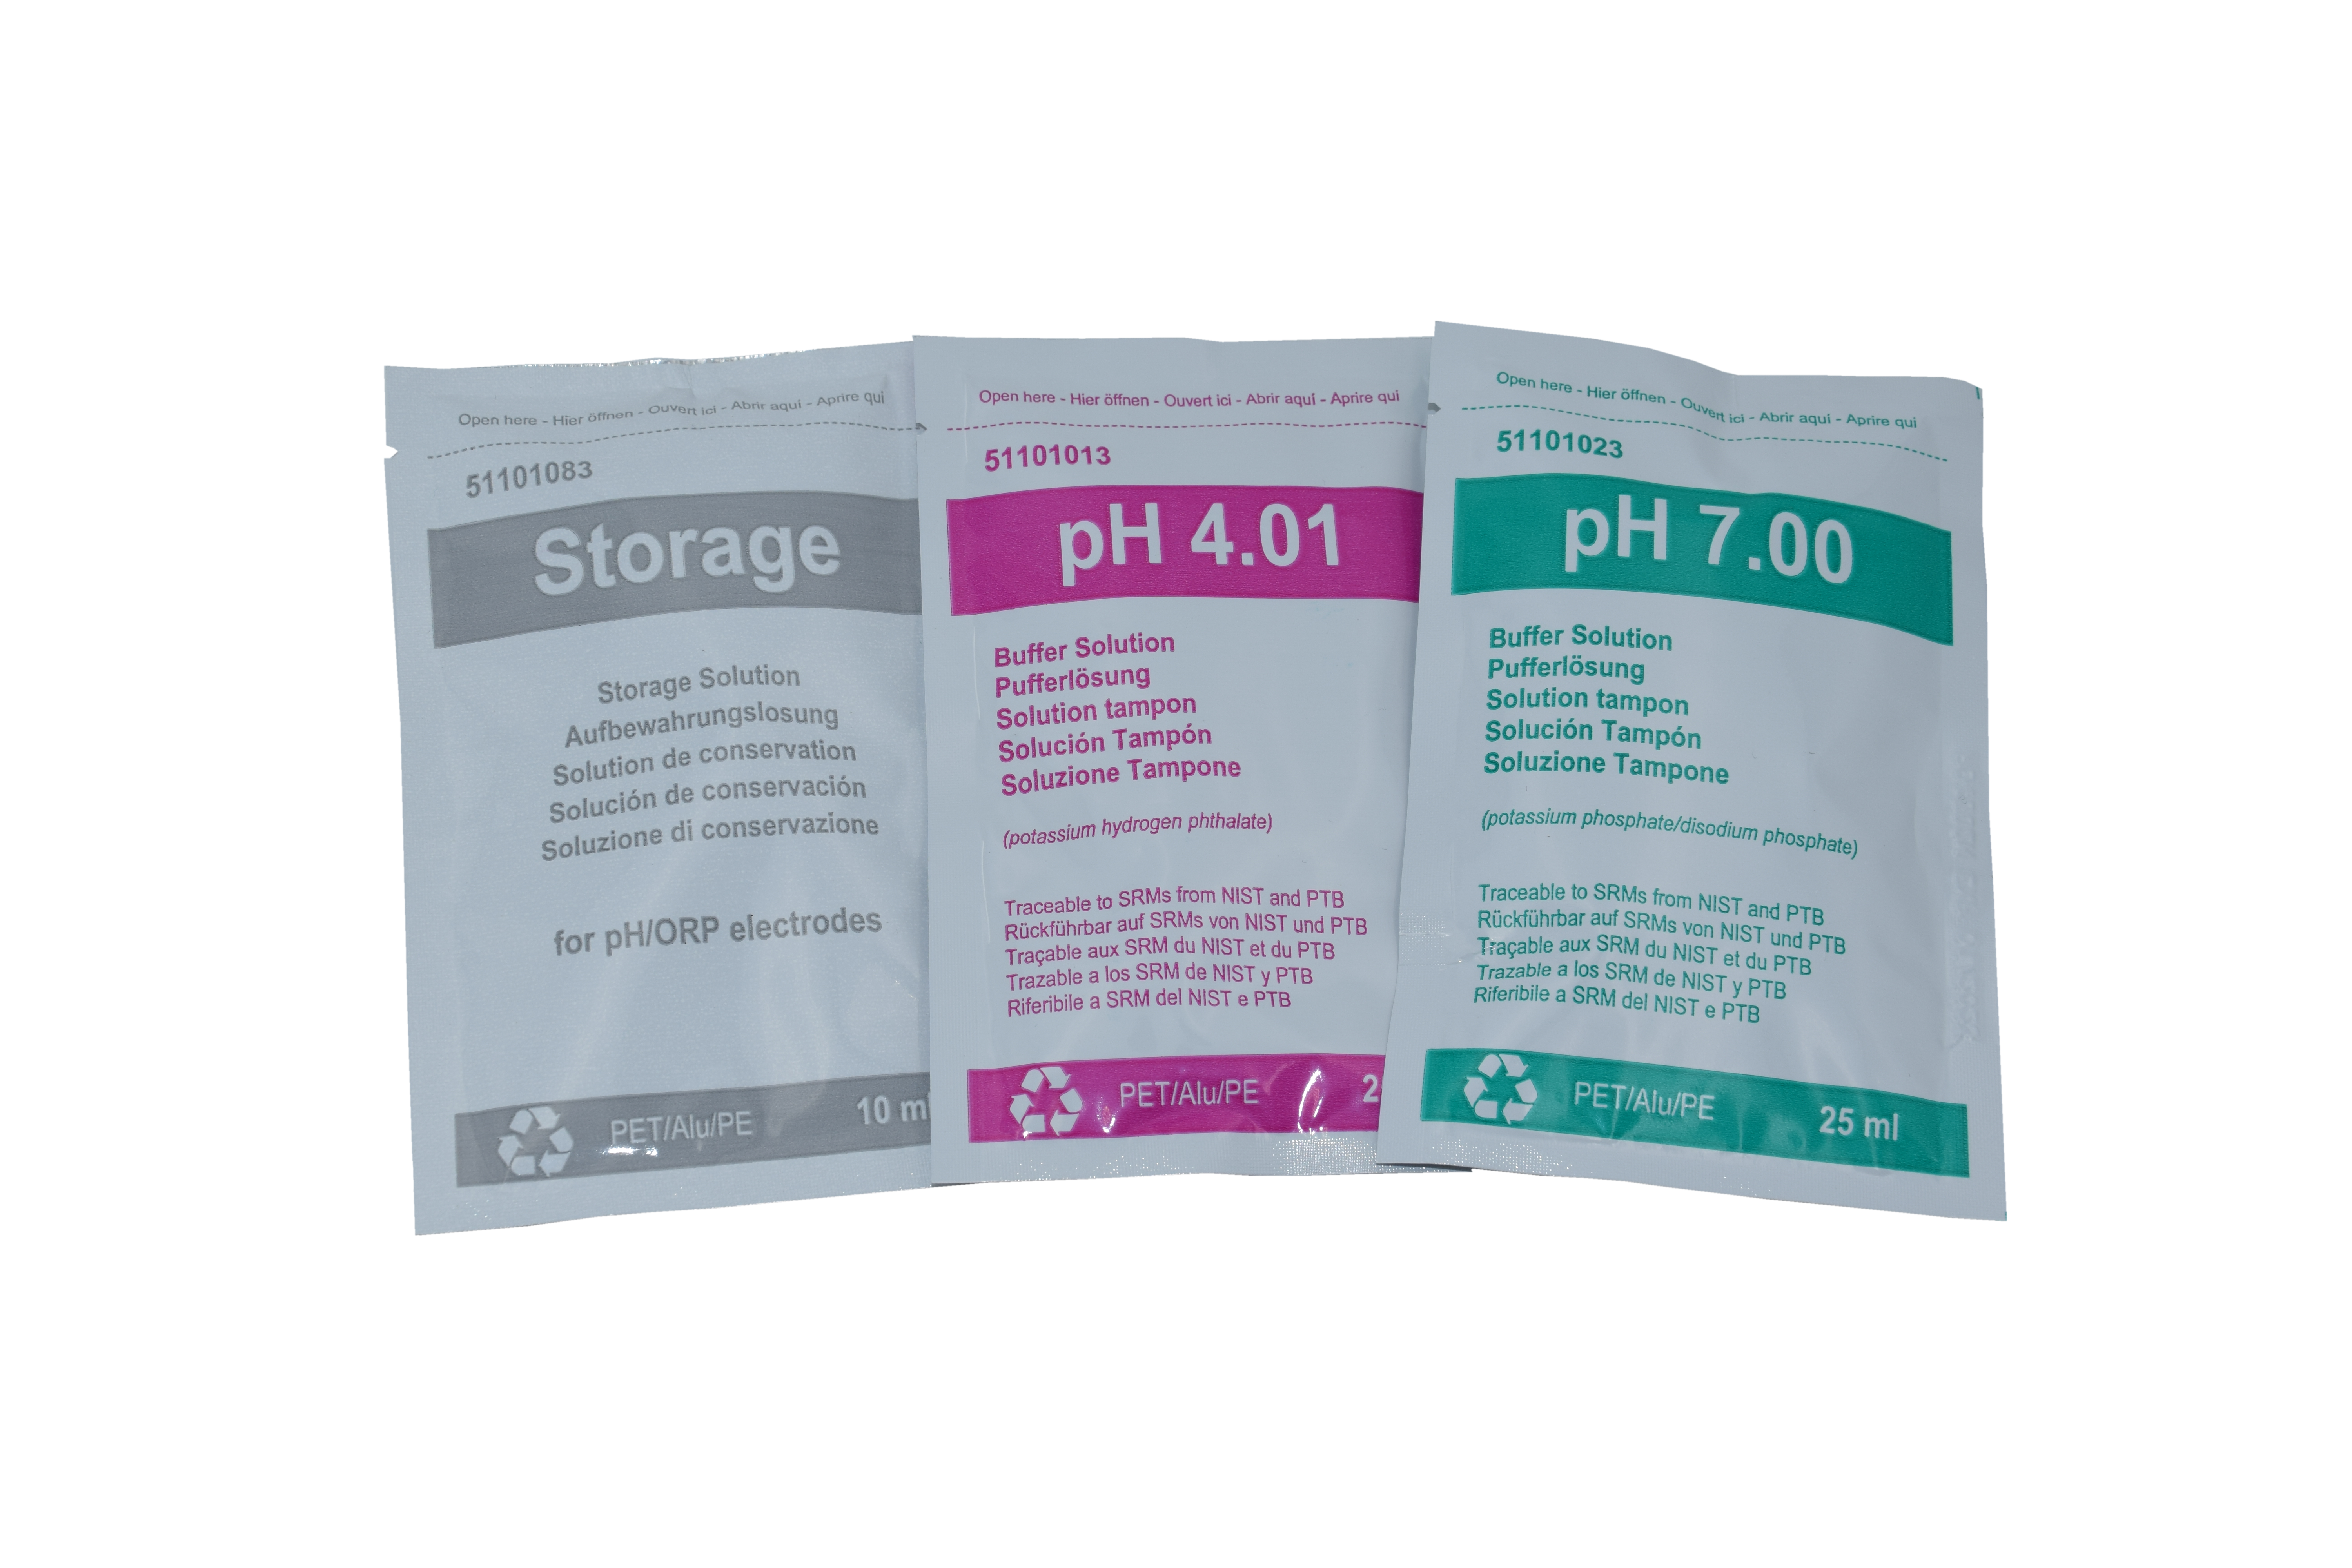 XS pH 5 FOOD Tester Kit - Foodstuffs Pocket Tester for pH/mV/Temperature measurement 